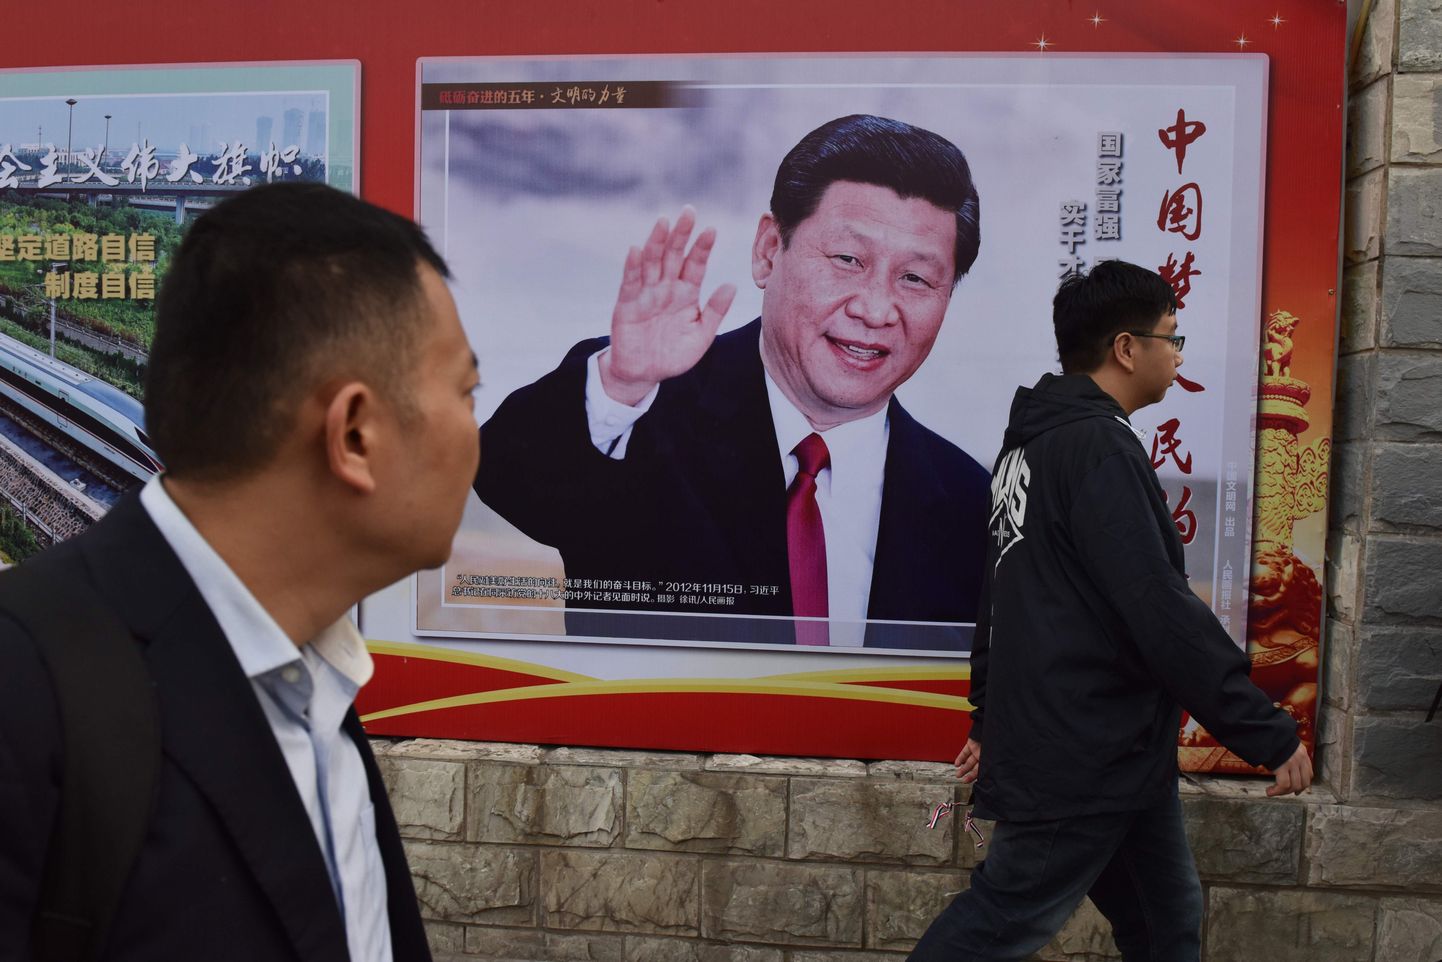 Xi Jinpingi kujutav plakat.